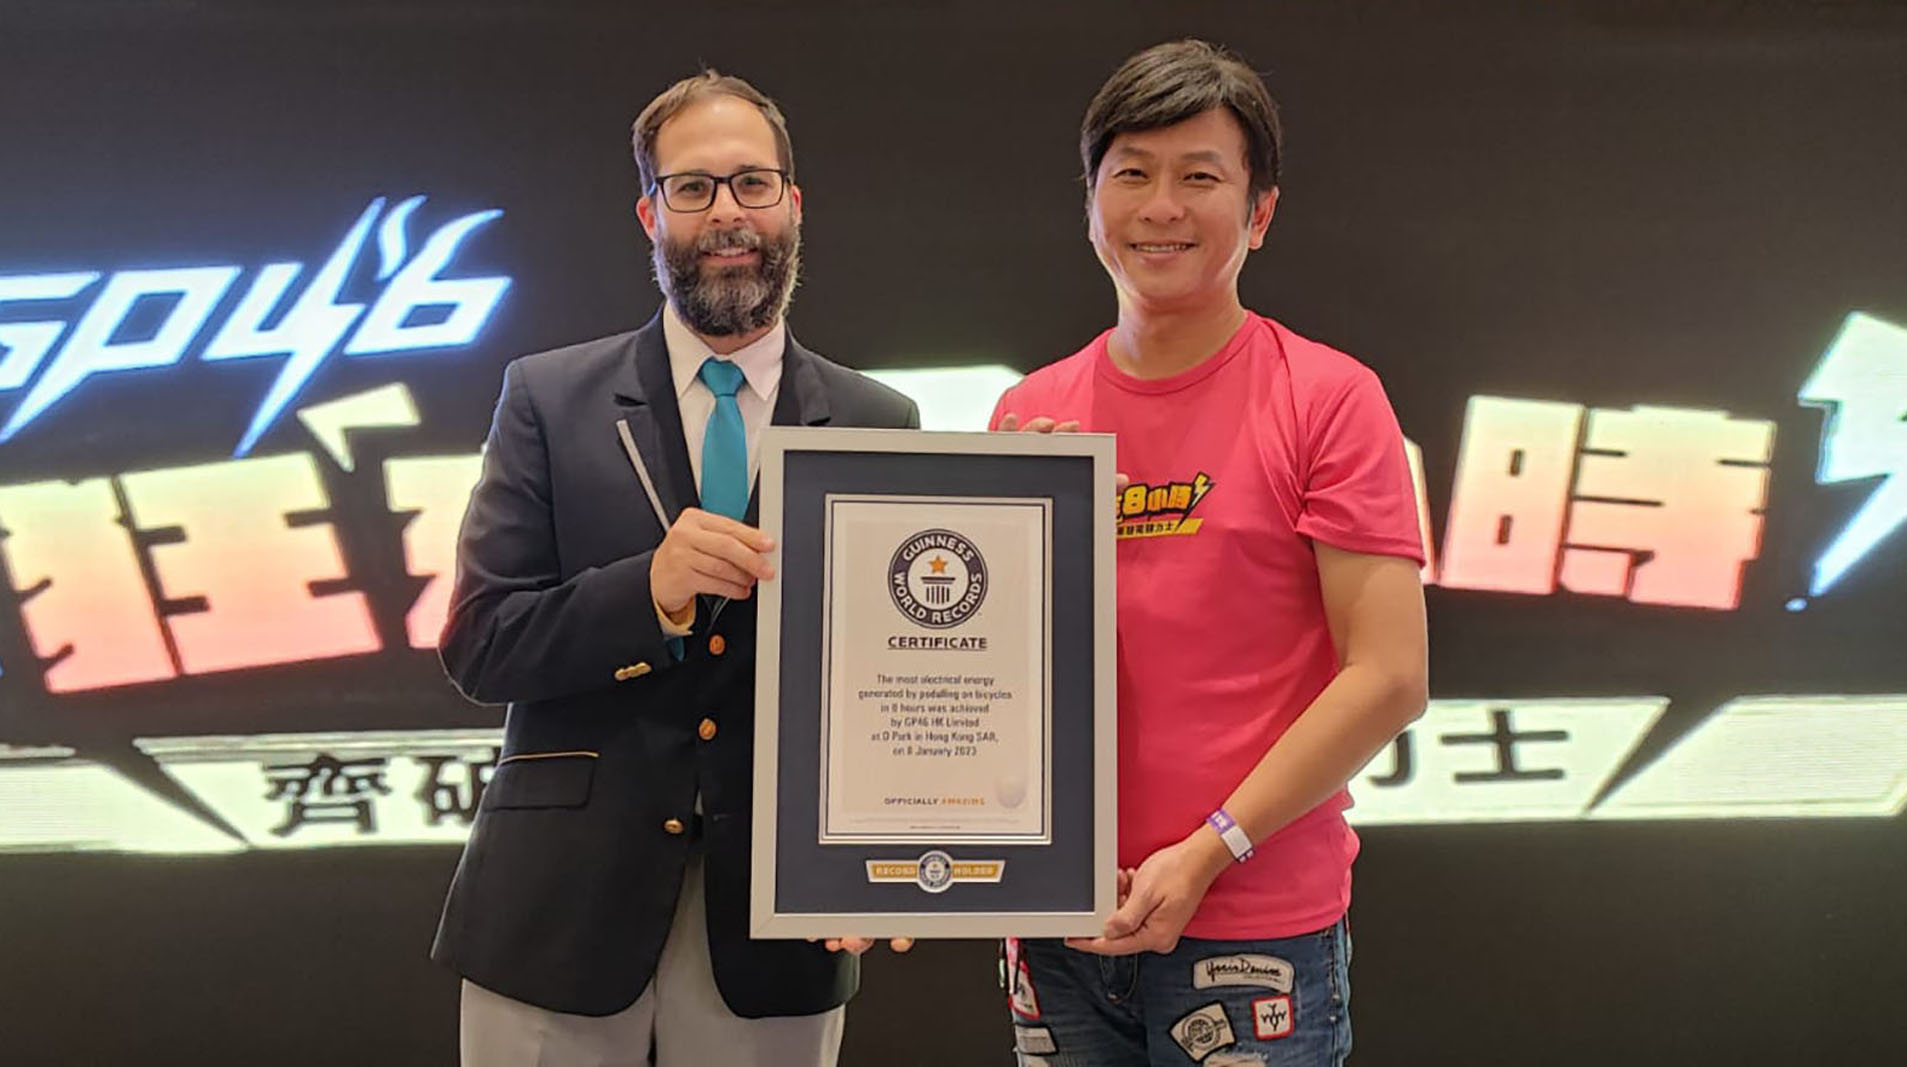 Yesir 指導學生群 "GP46" 創下新里程：狂充8小時單車發電打破健力士世界紀錄！